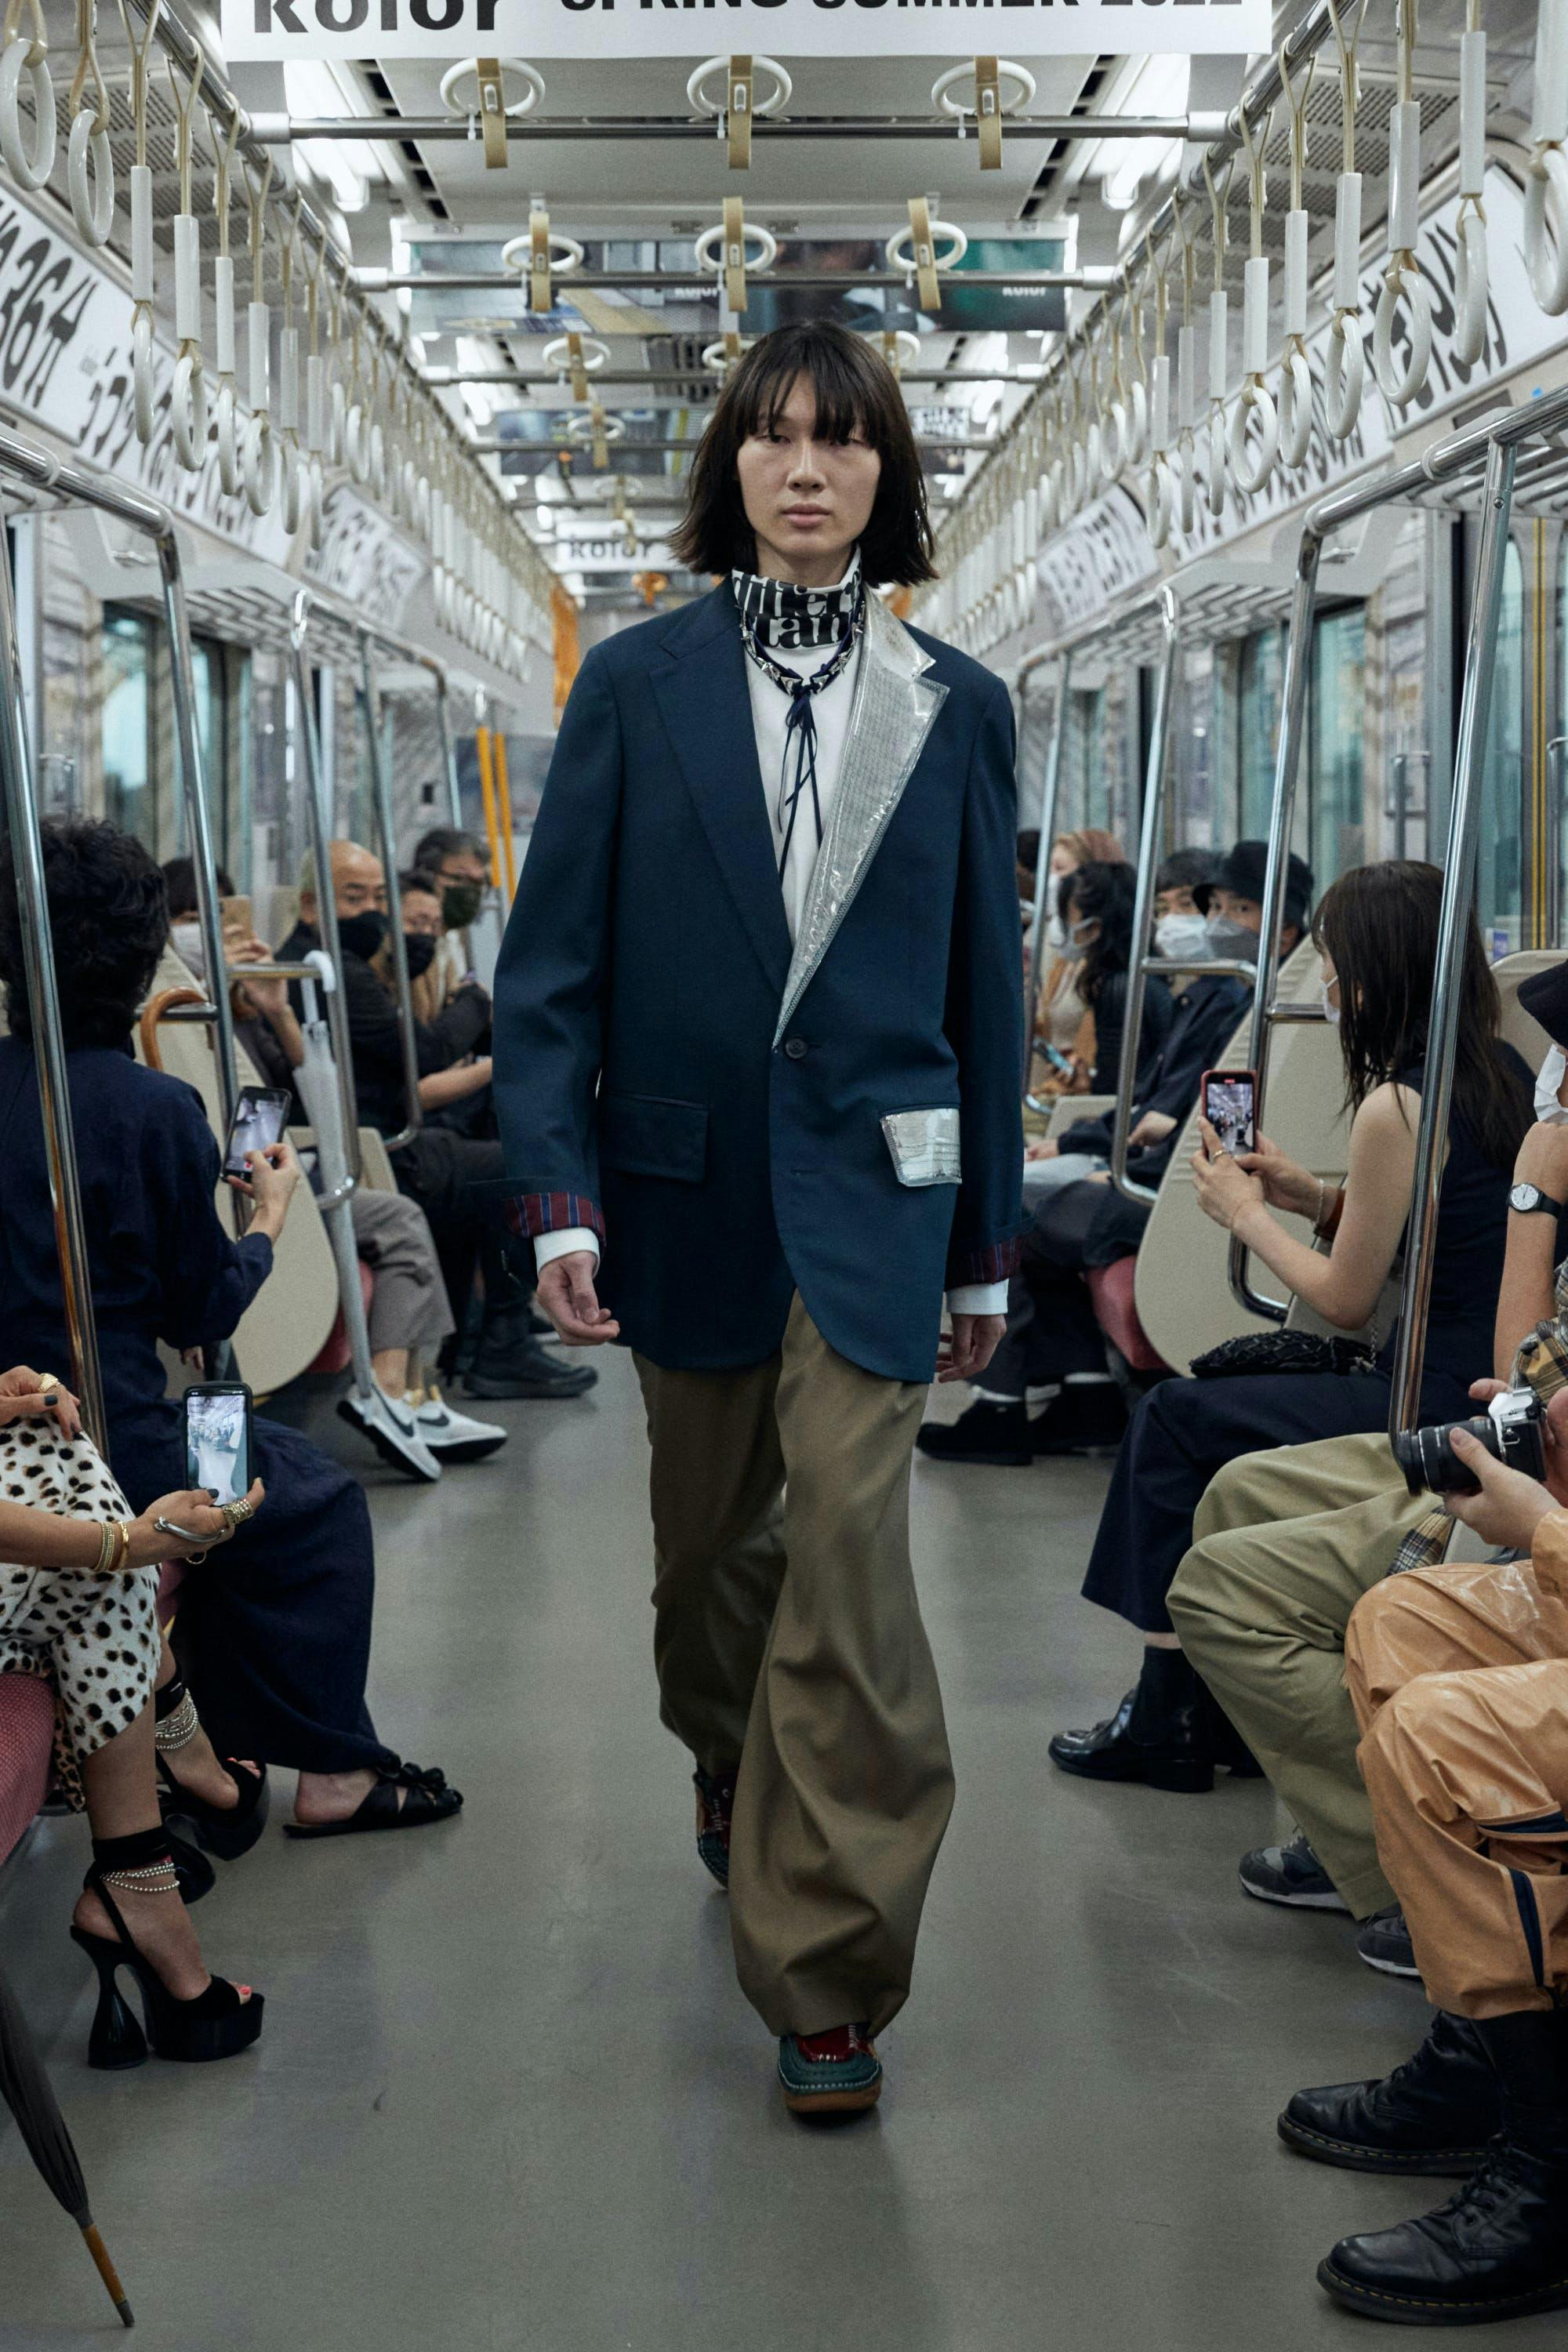 clothing person shoe train station transportation terminal train suit overcoat coat